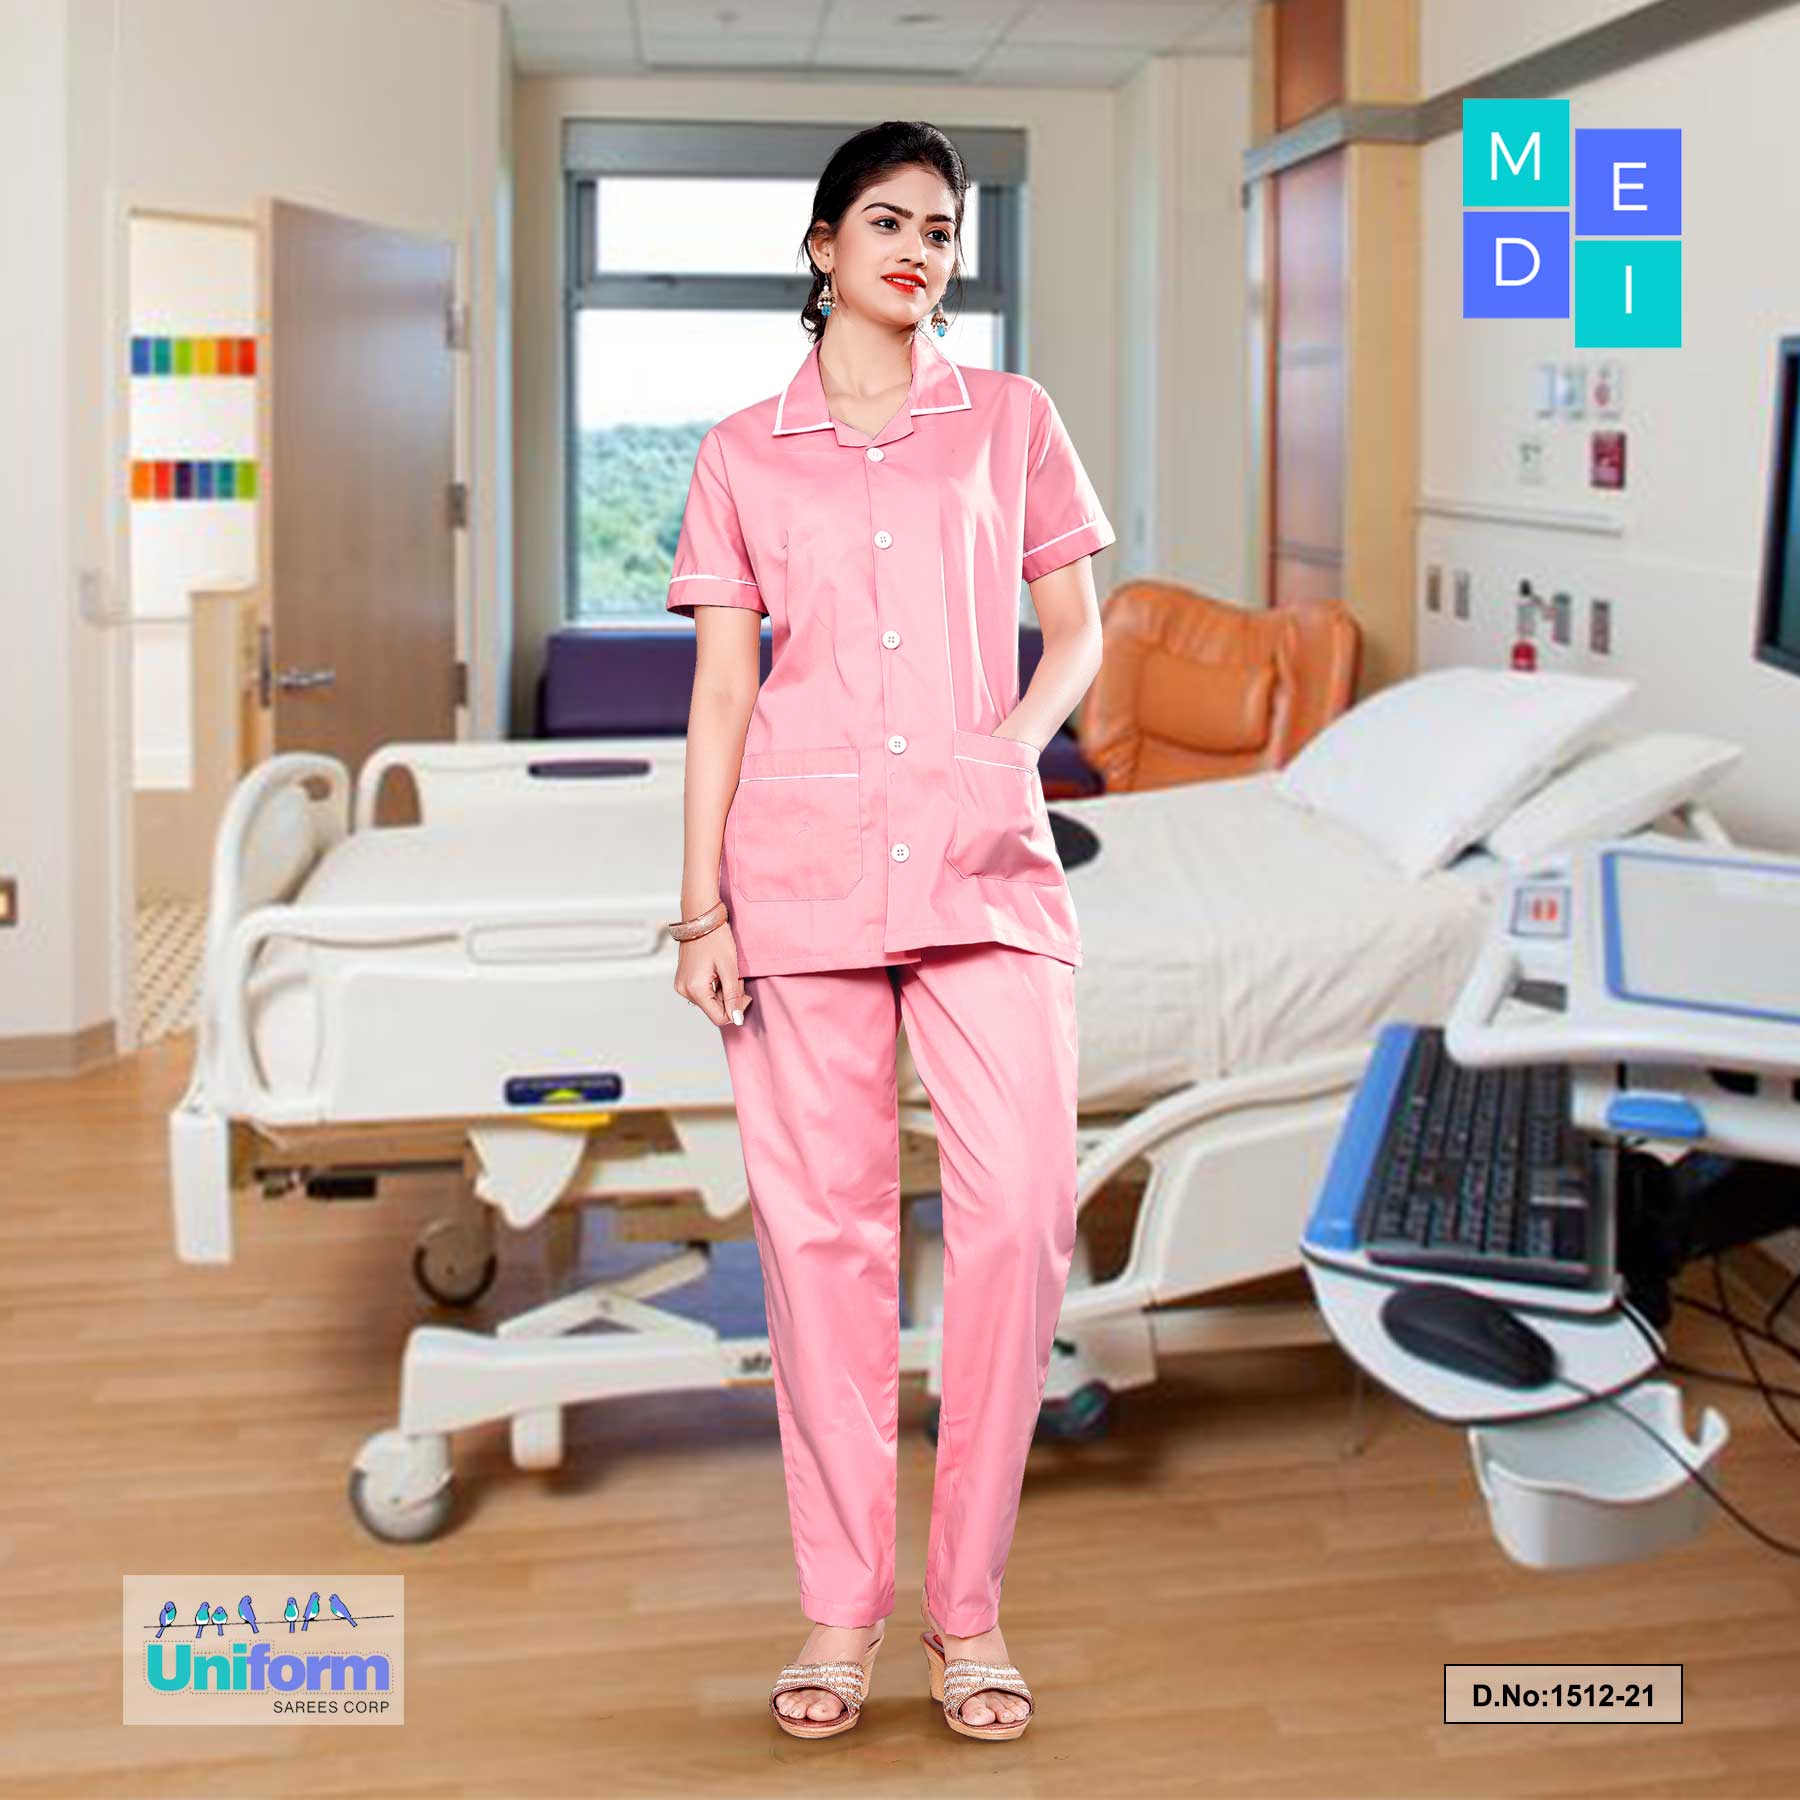 Nurse Dress For Women  Hospital Uniform, 1512 Light Pink And